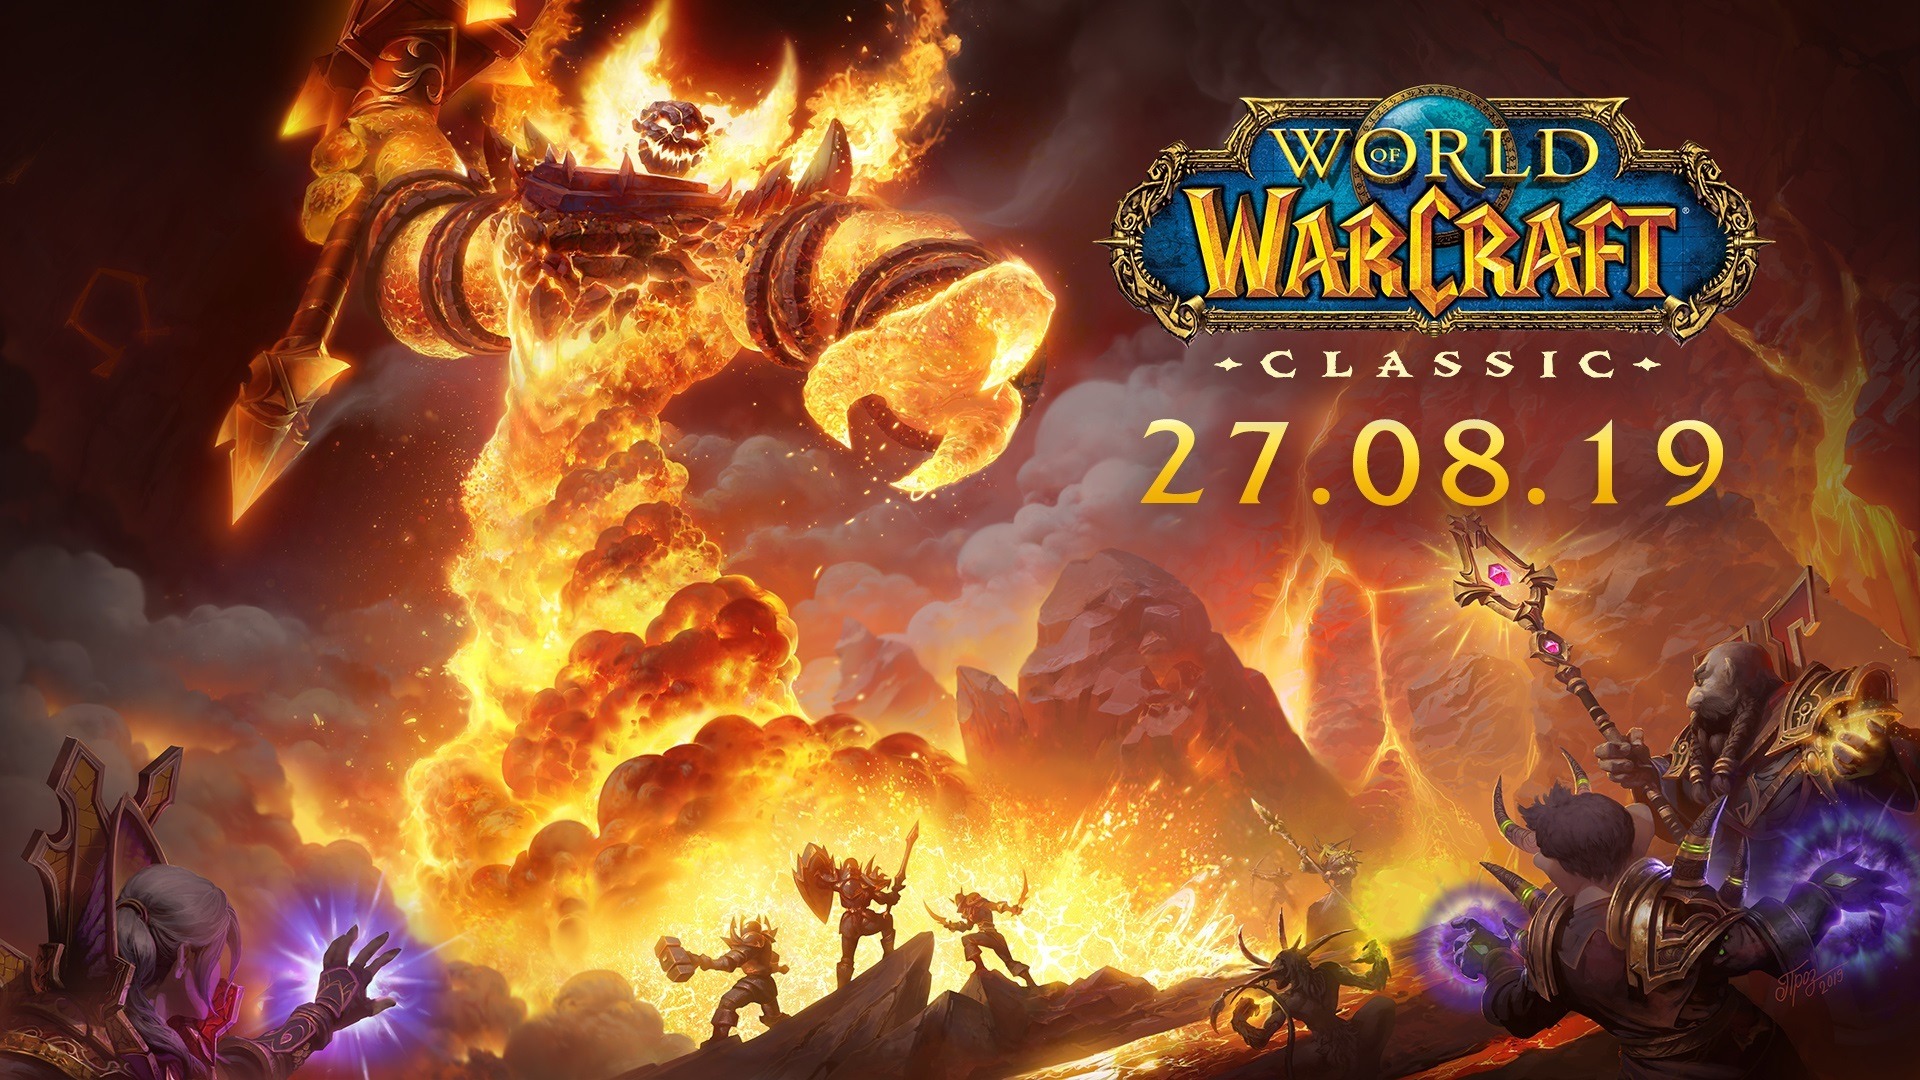 World of Warcraft Classic sekarang tersedia!